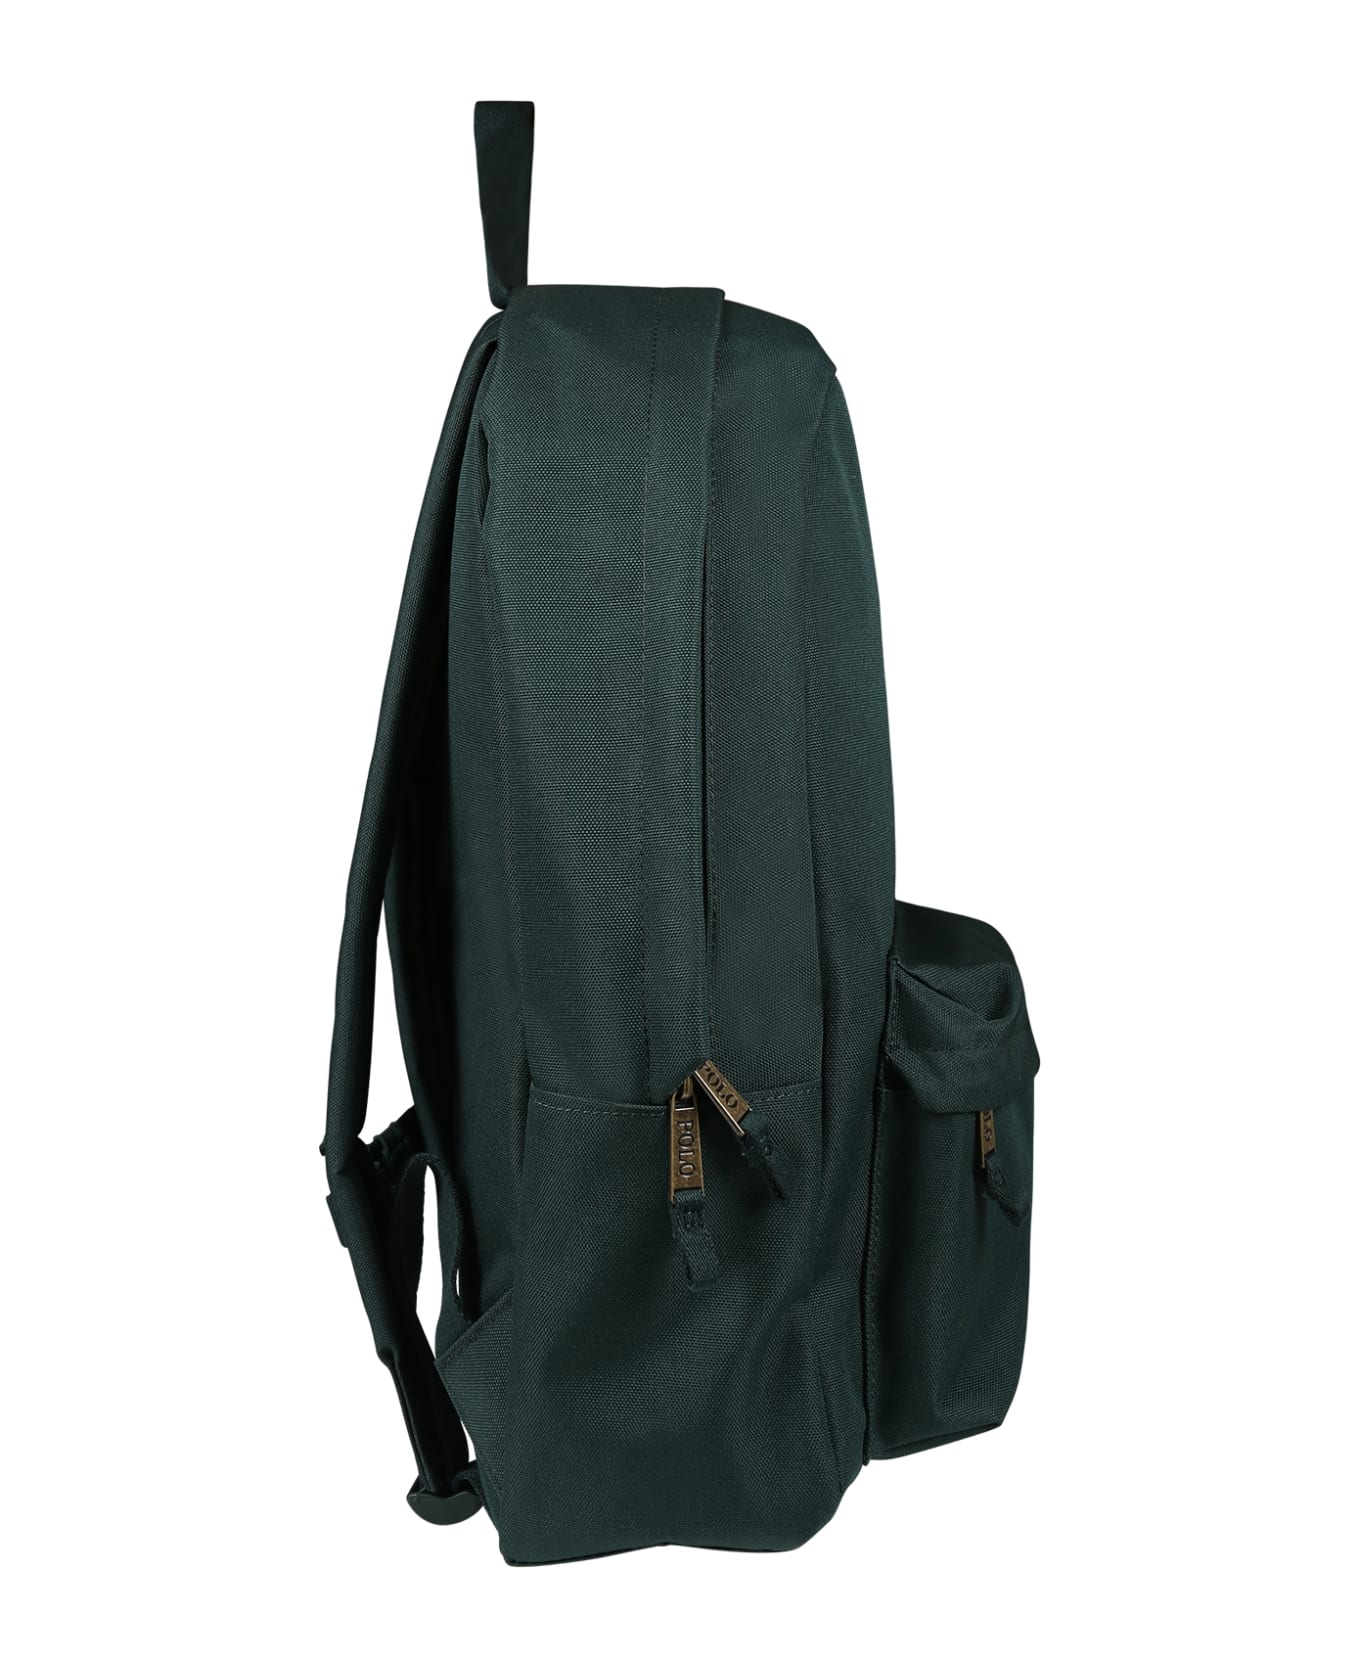 Ralph Lauren Green Backpack For Kids - Green